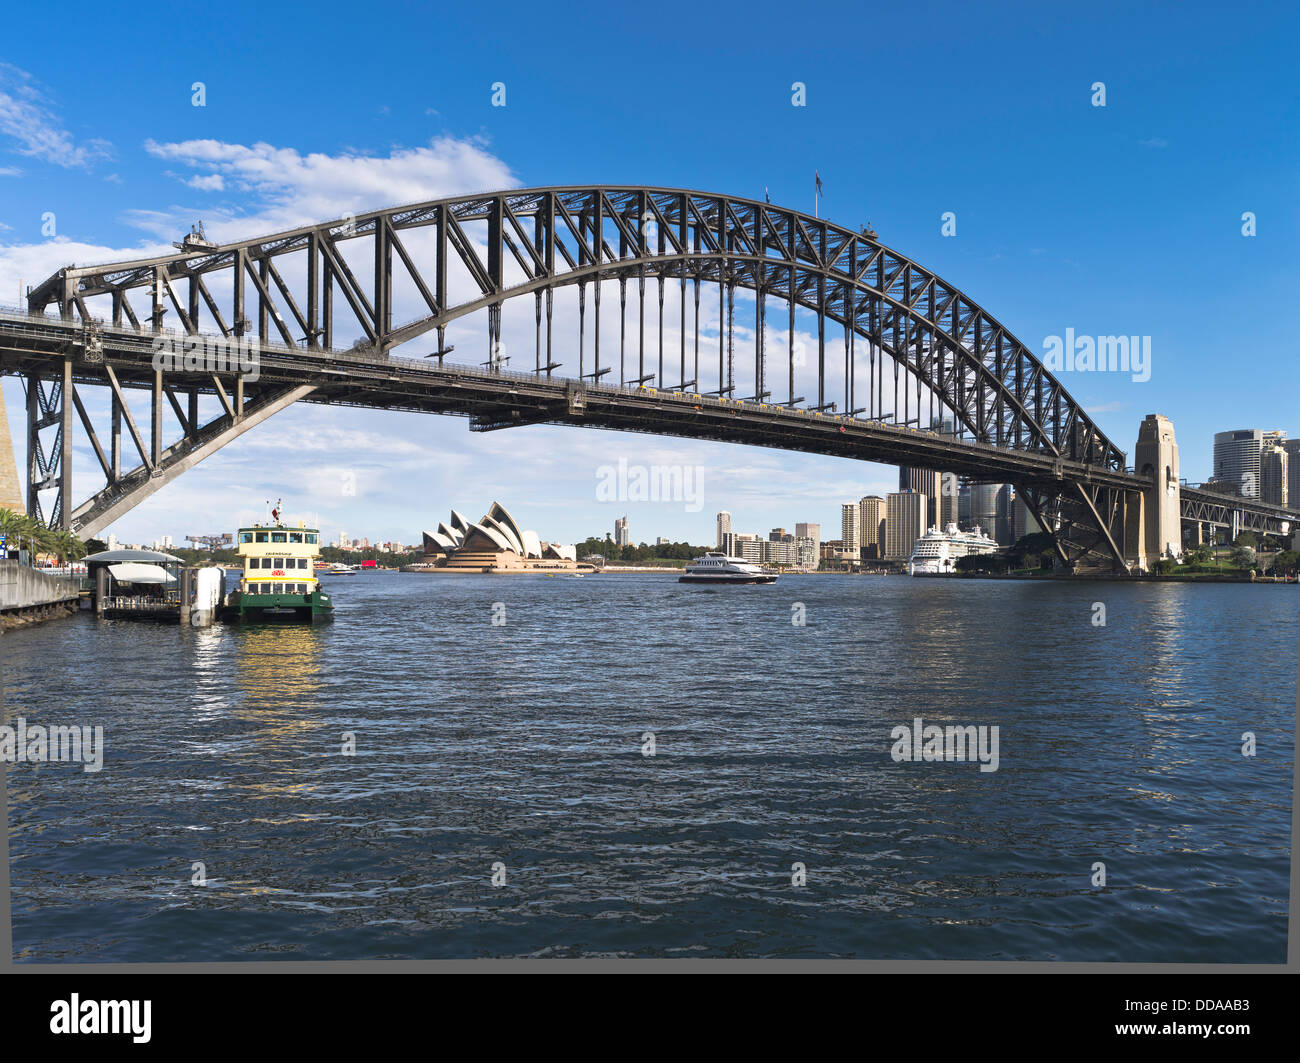 dh Sydney Harbour Bridge SYDNEY AUSTRALIA Sydney Opera House city skyscraper skyline ferries Milsons Point wharf Stock Photo